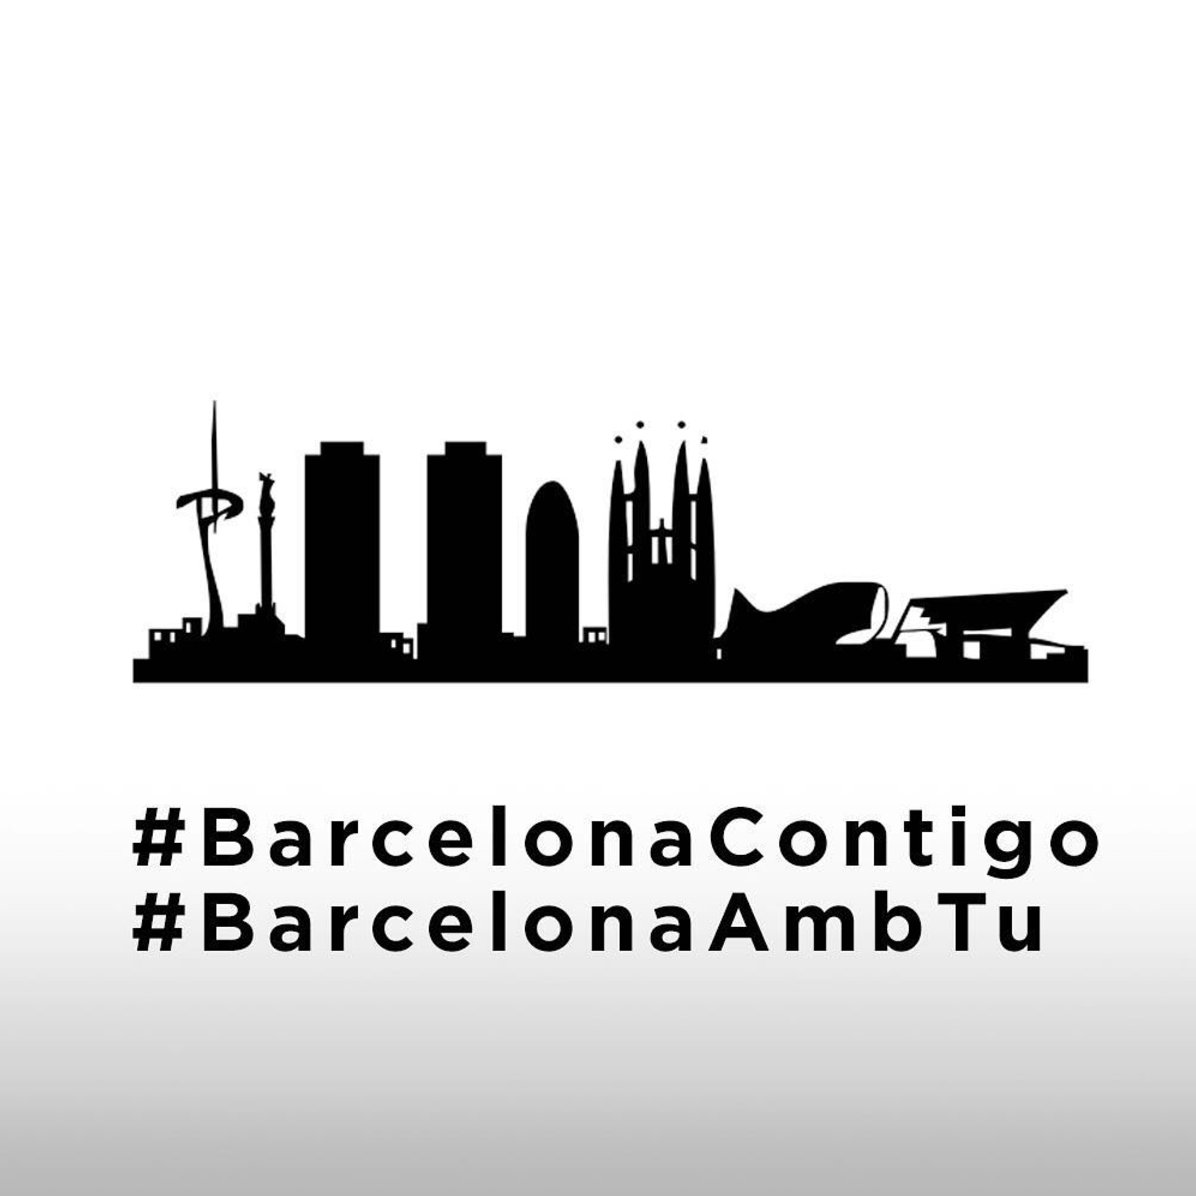 #Barcelona Mi corazón está con todos vosotros. Que tristeza mas grande. #paz #BarcelonaContigo https://t.co/QinBSCfrqA